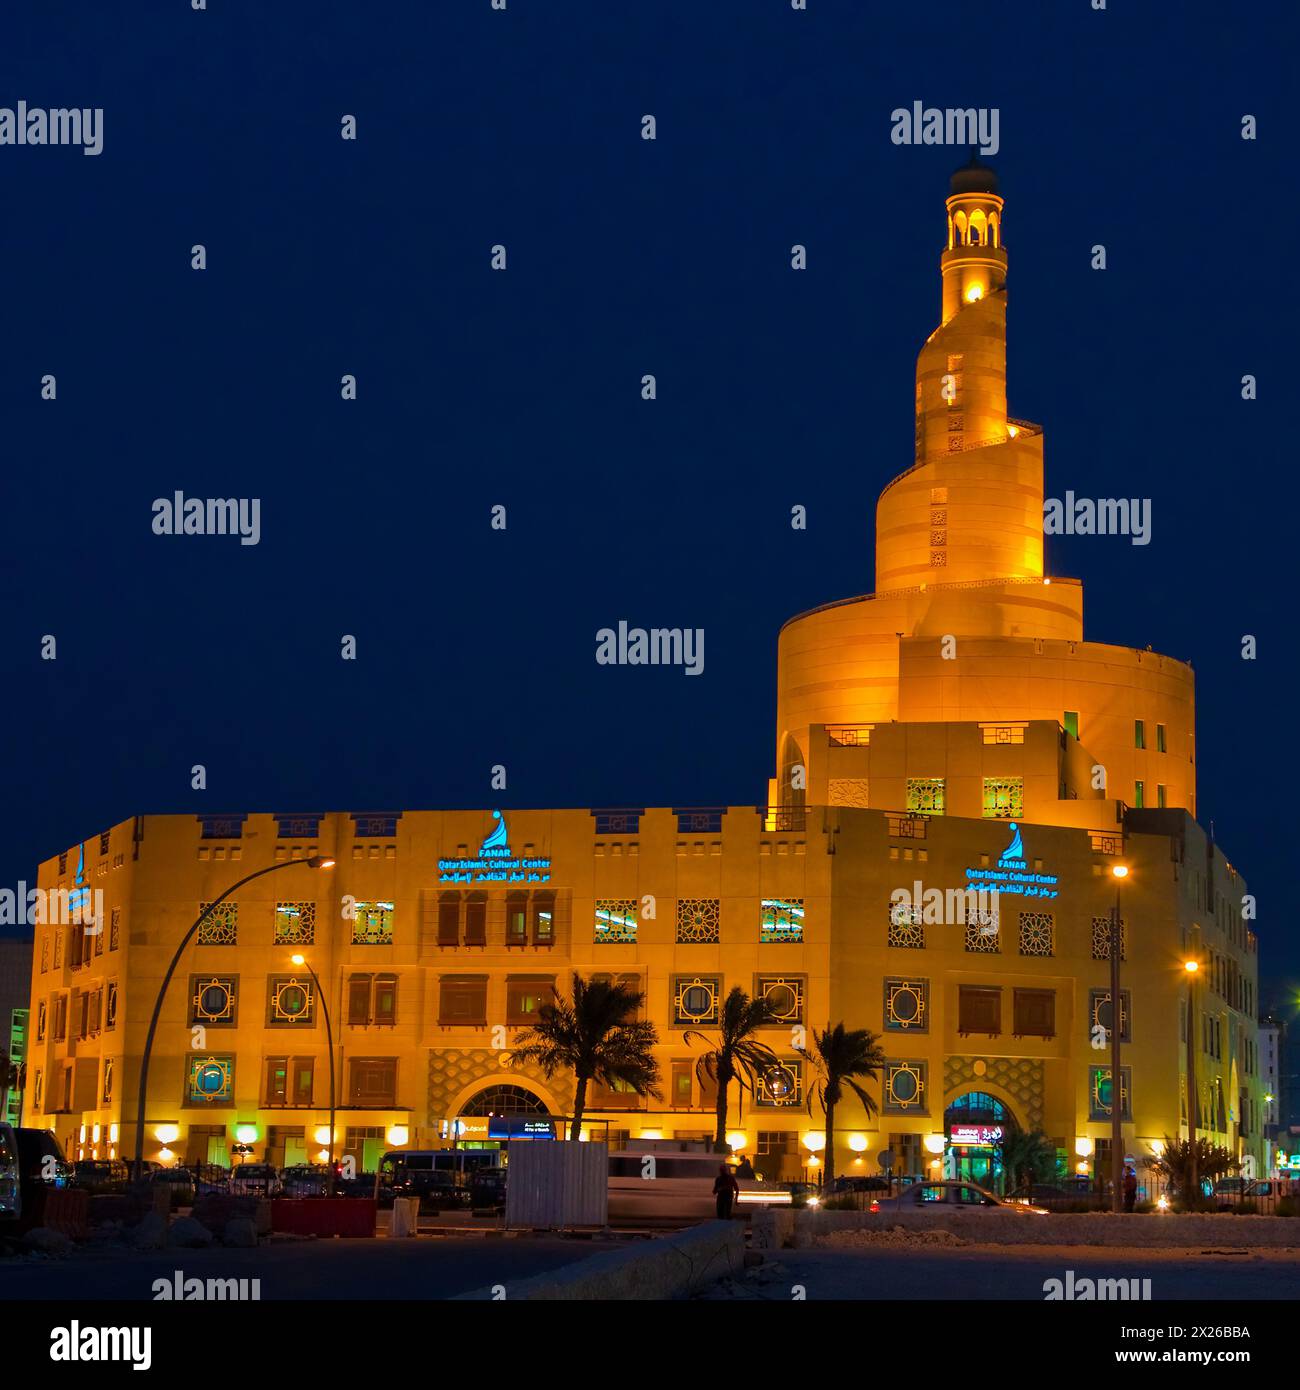 Doha, Qatar.  Kassem Darwish Fakhroo Centre, based on the Great Mosque of al-Mutawwakil, in Samarra, Iraq.  Night Scene. Stock Photo